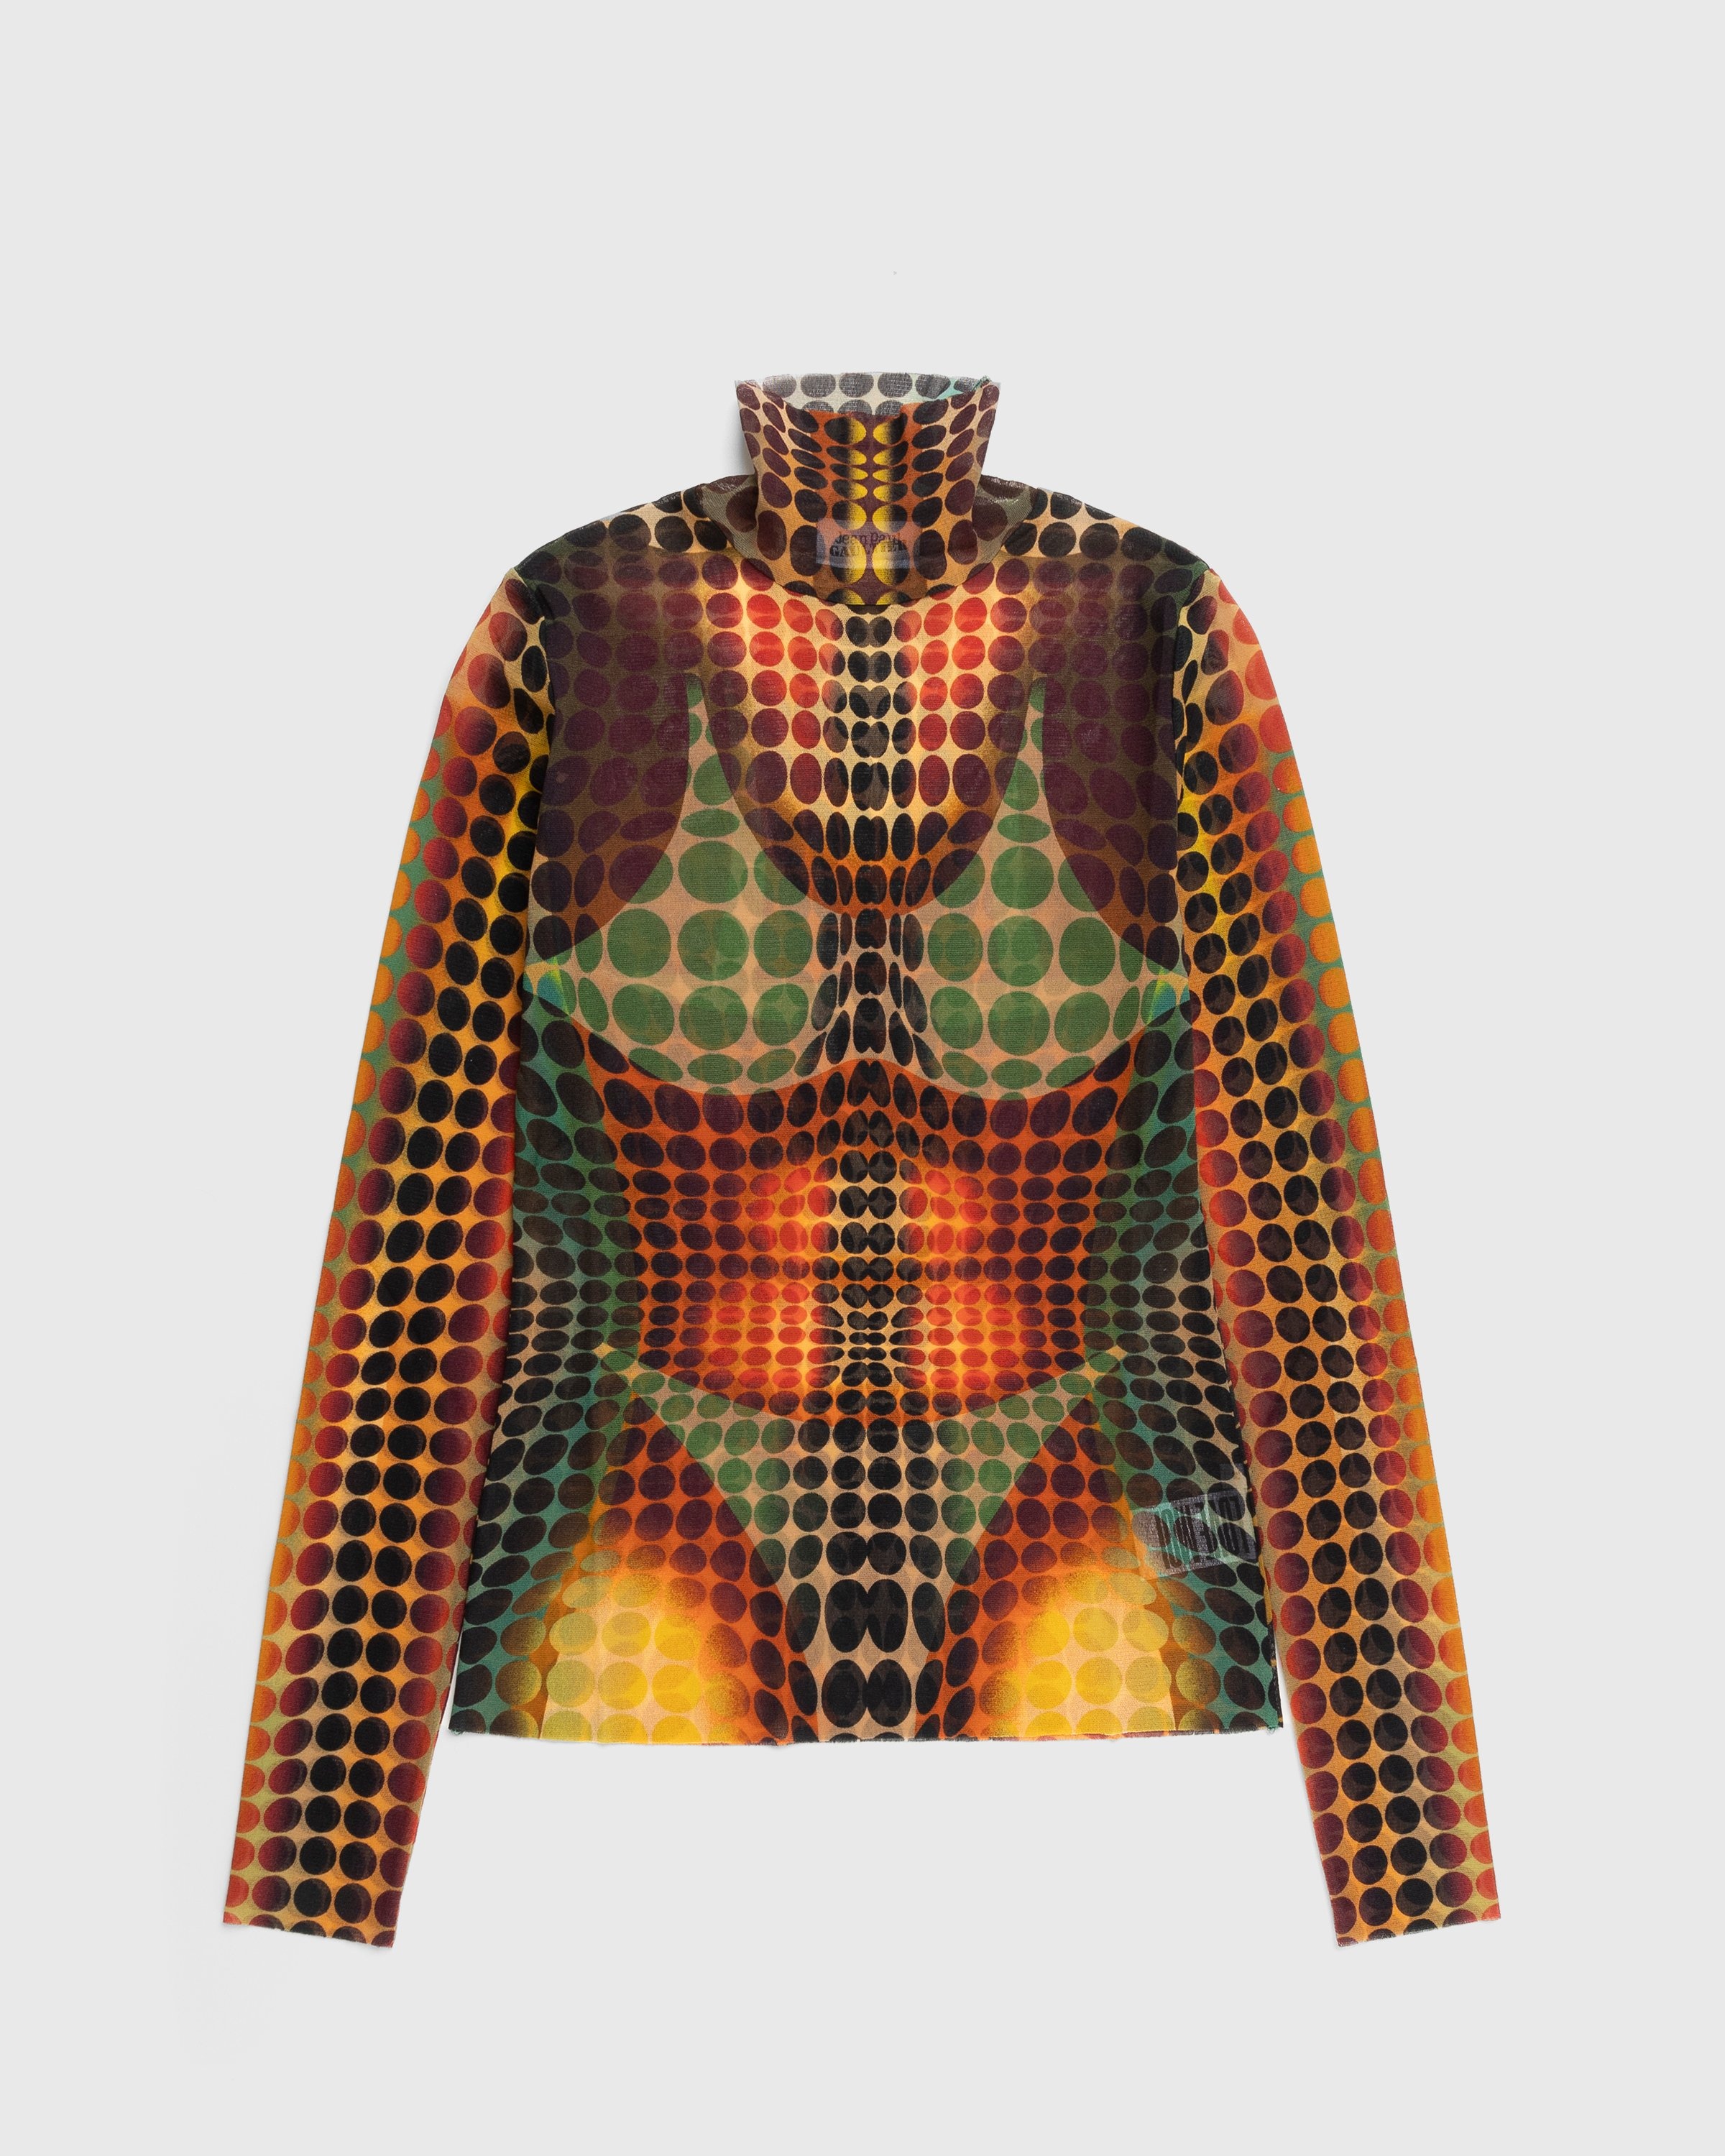 Jean Paul Gaultier – High Neck Longsleeve Top Orange | Highsnobiety Shop